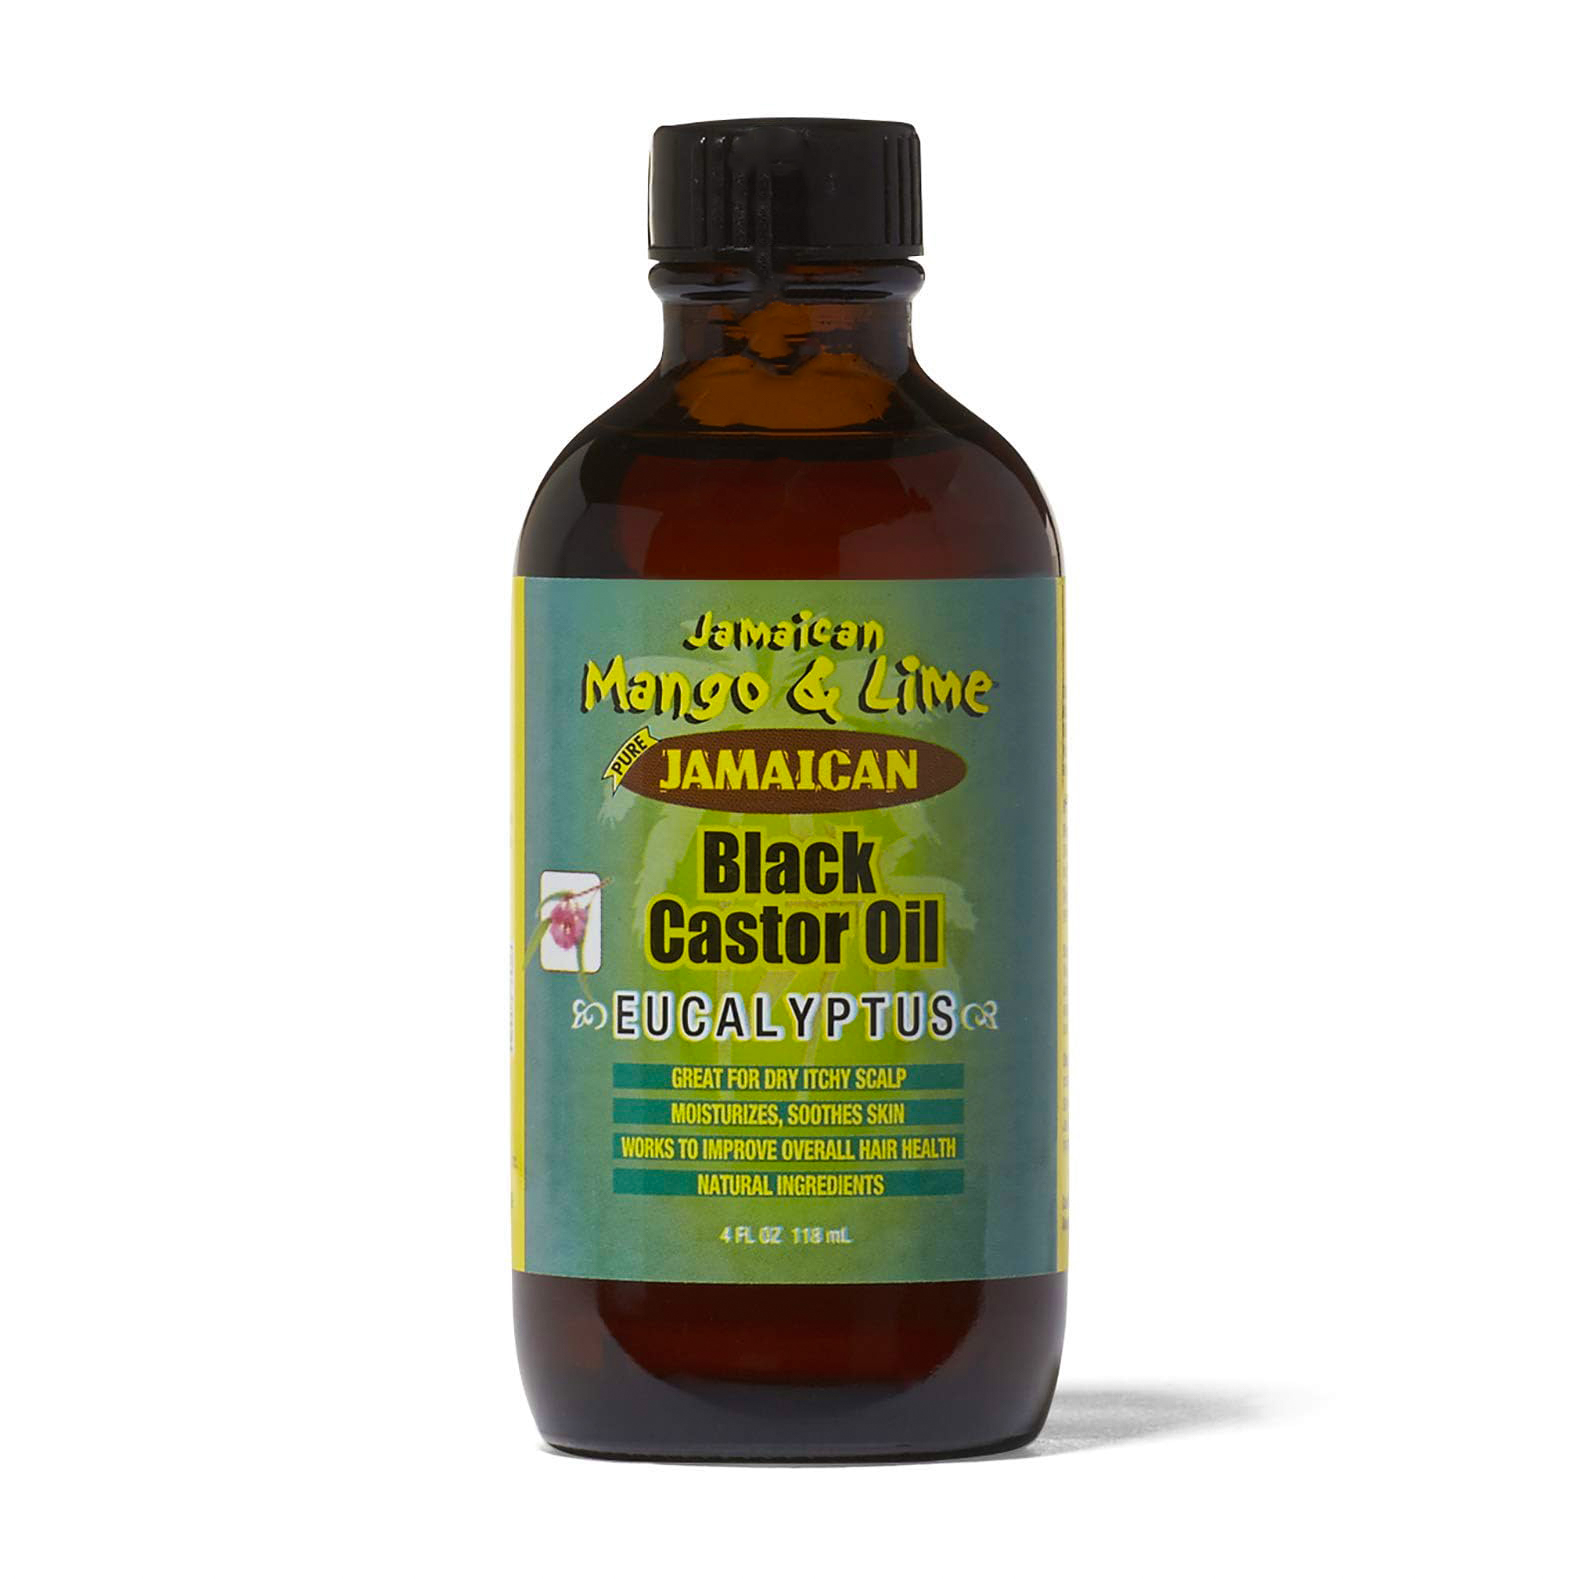 Jamaican mango and lime- Jamaican black castor oil Eucalyptus